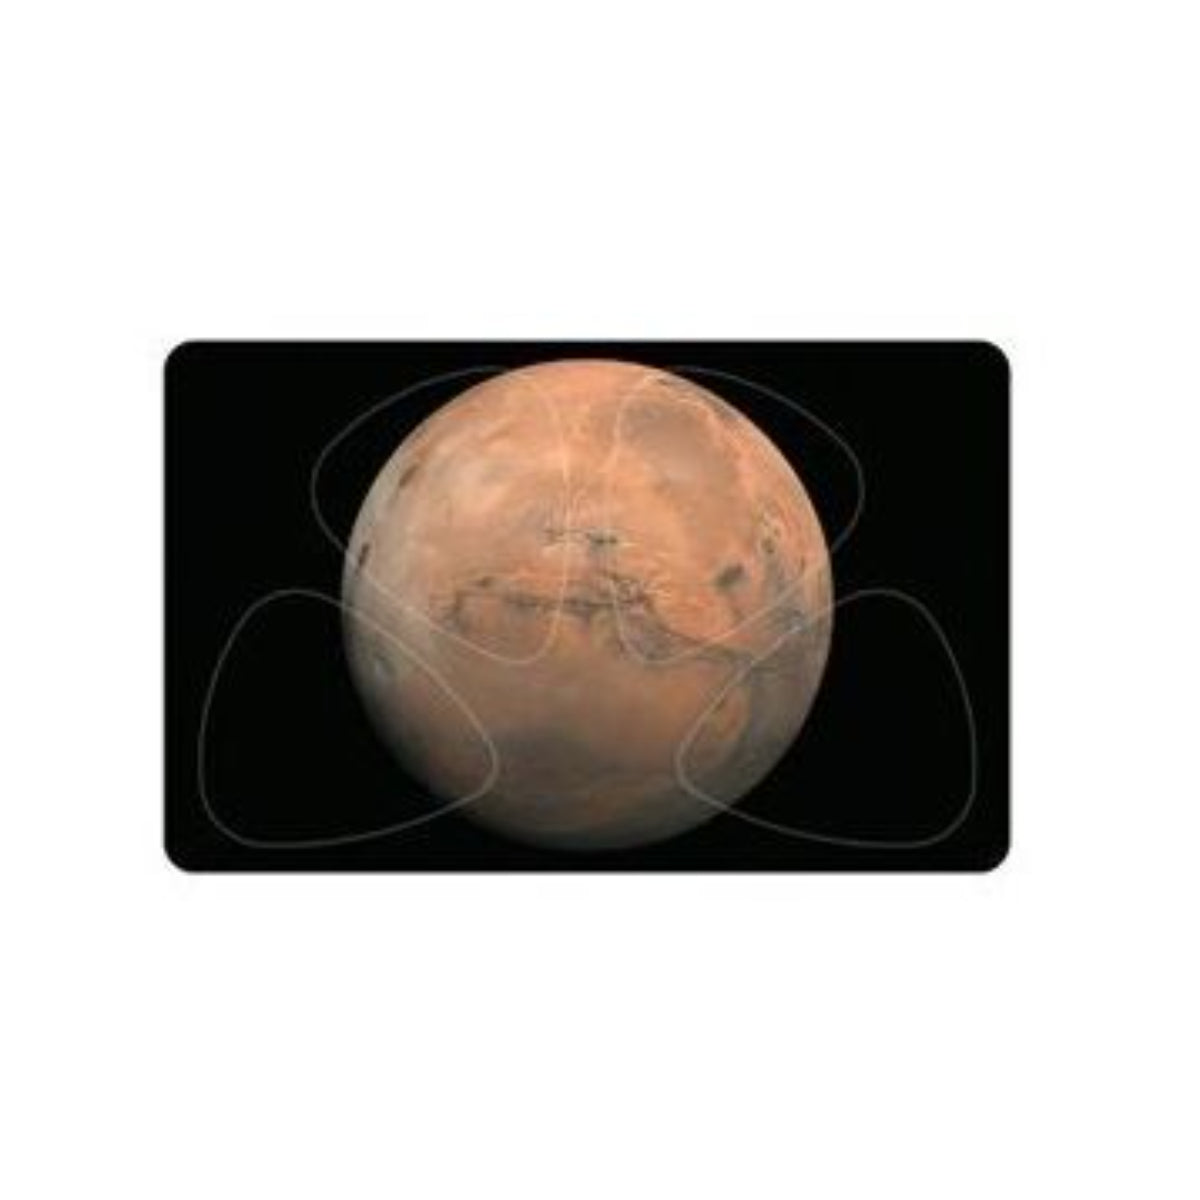 Pick card - 4 picks - Mars Design